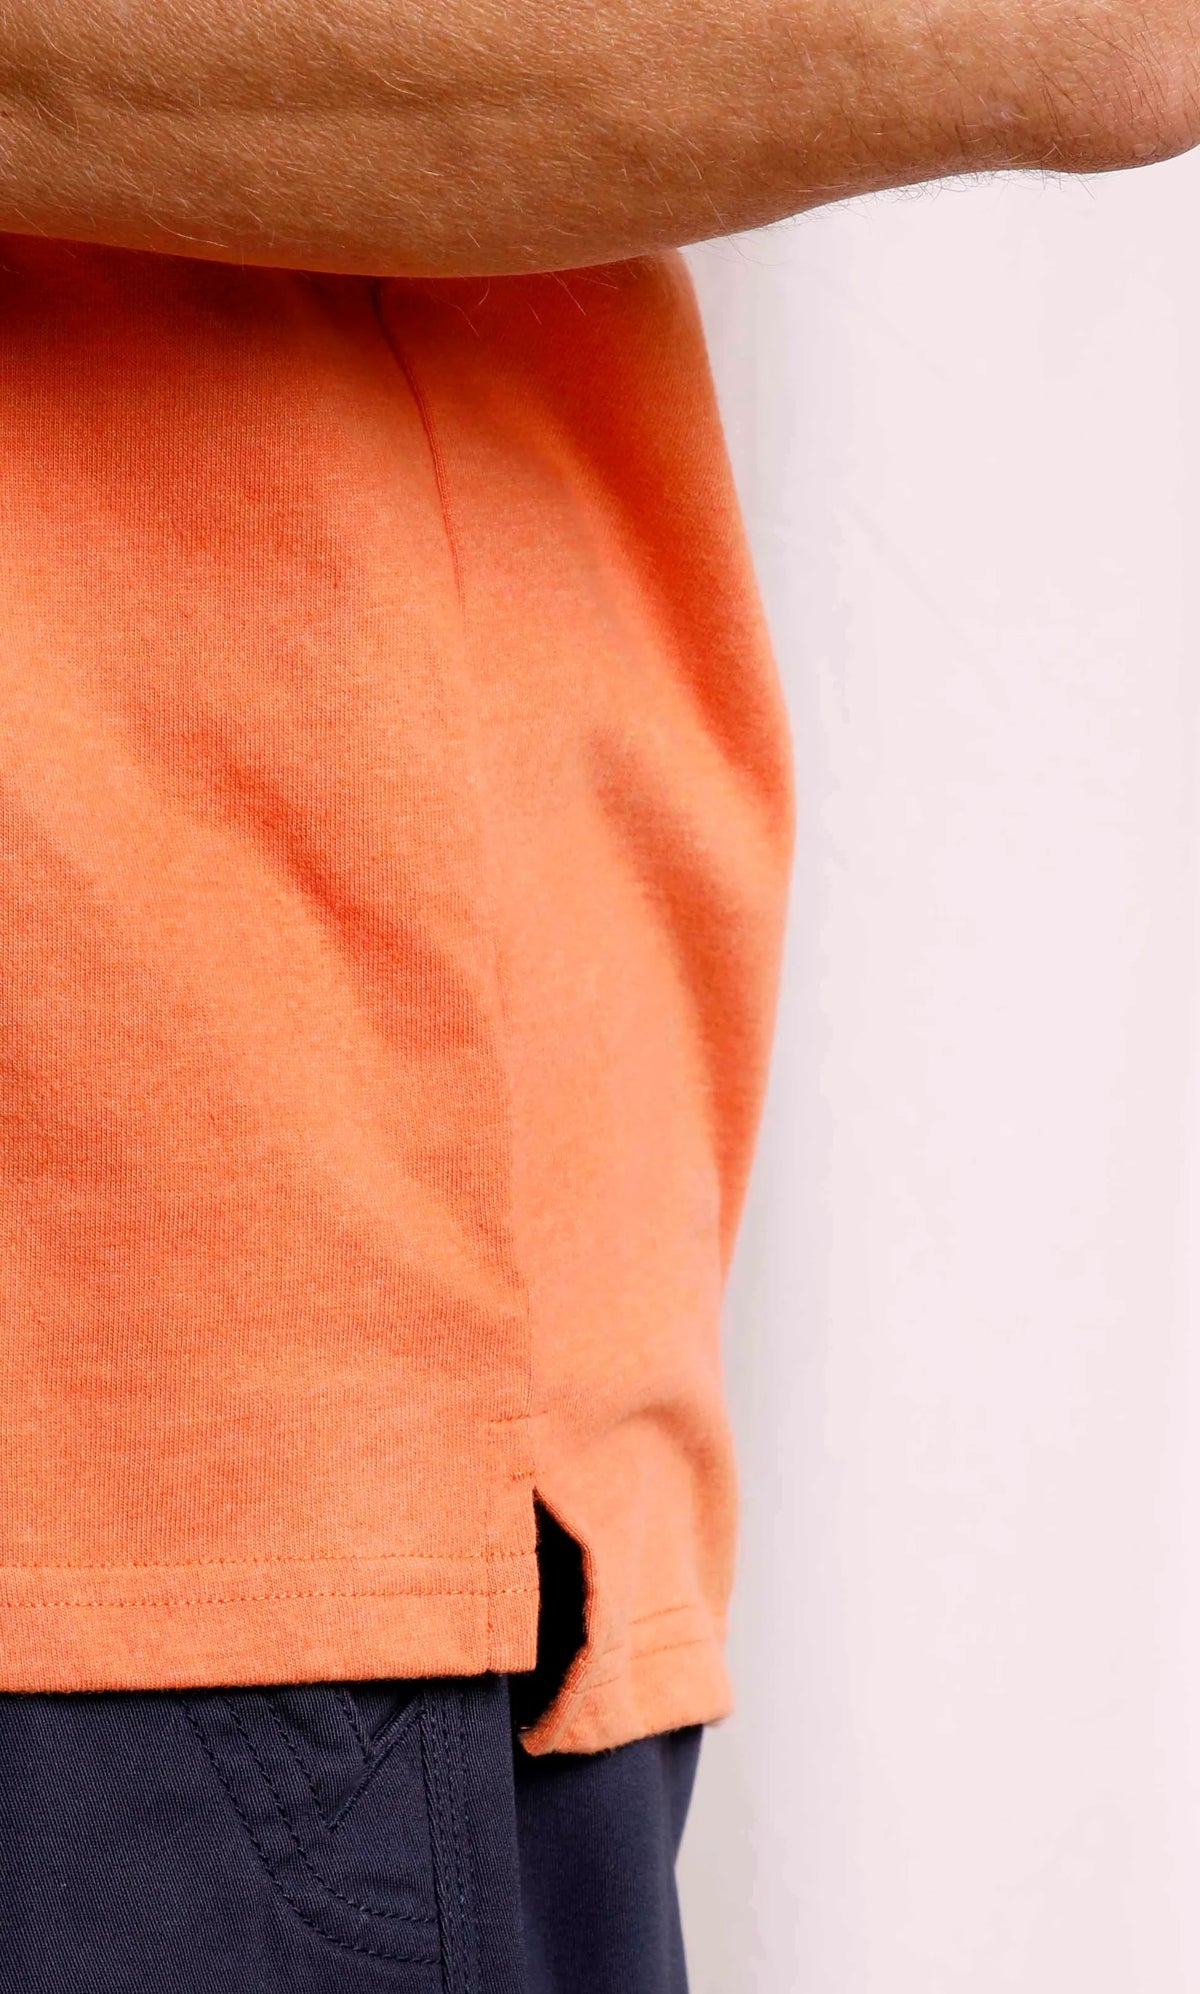 Men's Mango Orange coloured Jetstream jersey polo shirt from Weird Fish.